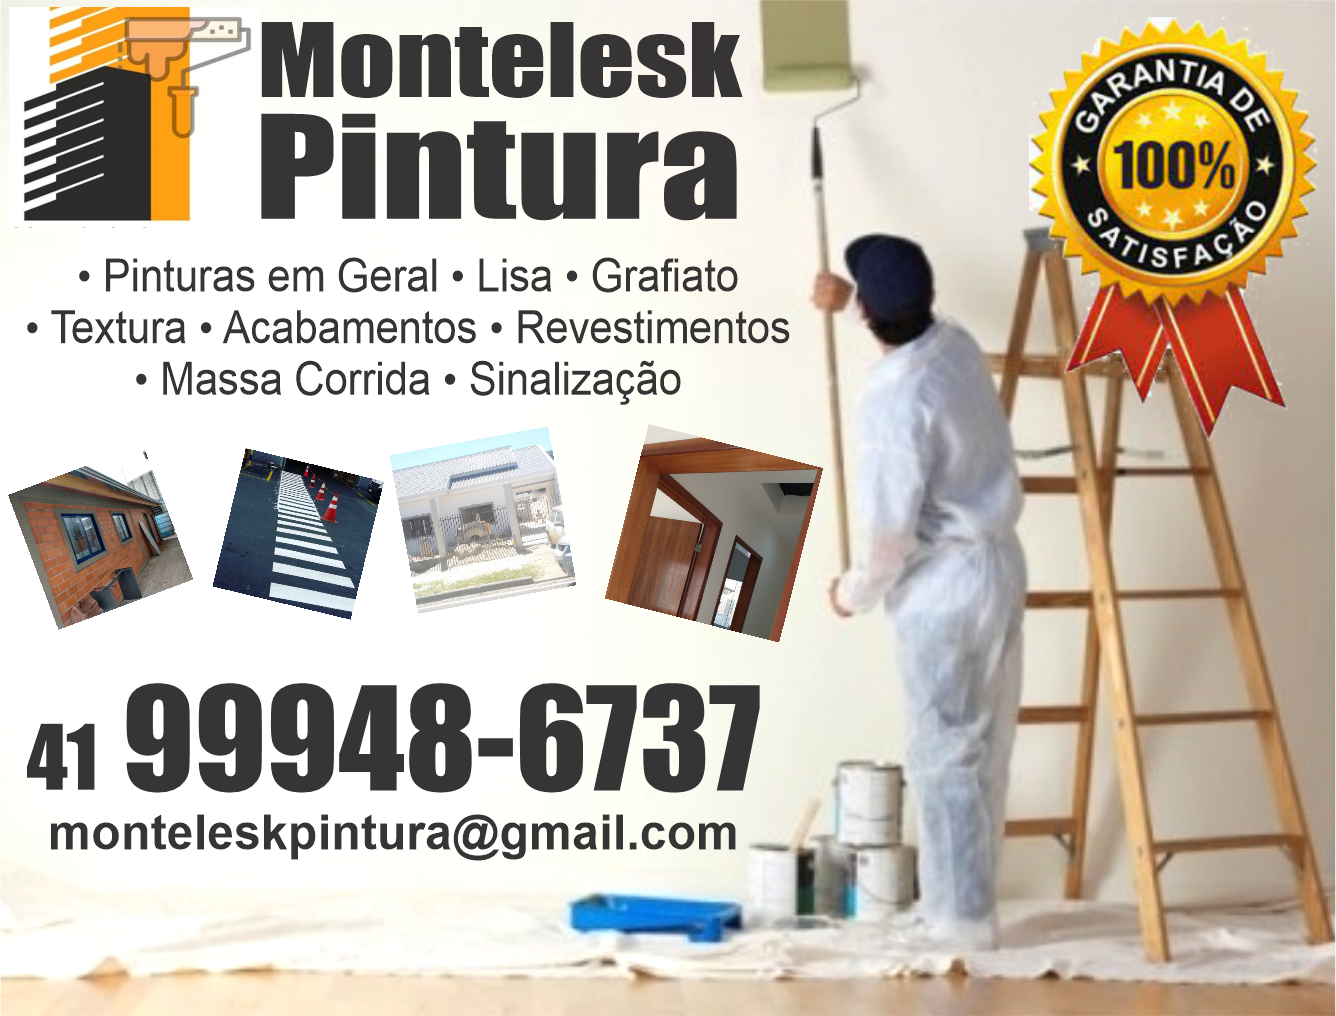 Montelesk Pintura      RUA Antônio Czarnik, 57, ARAUCÁRIA - PR  Fones: (41) 99948-6737 /